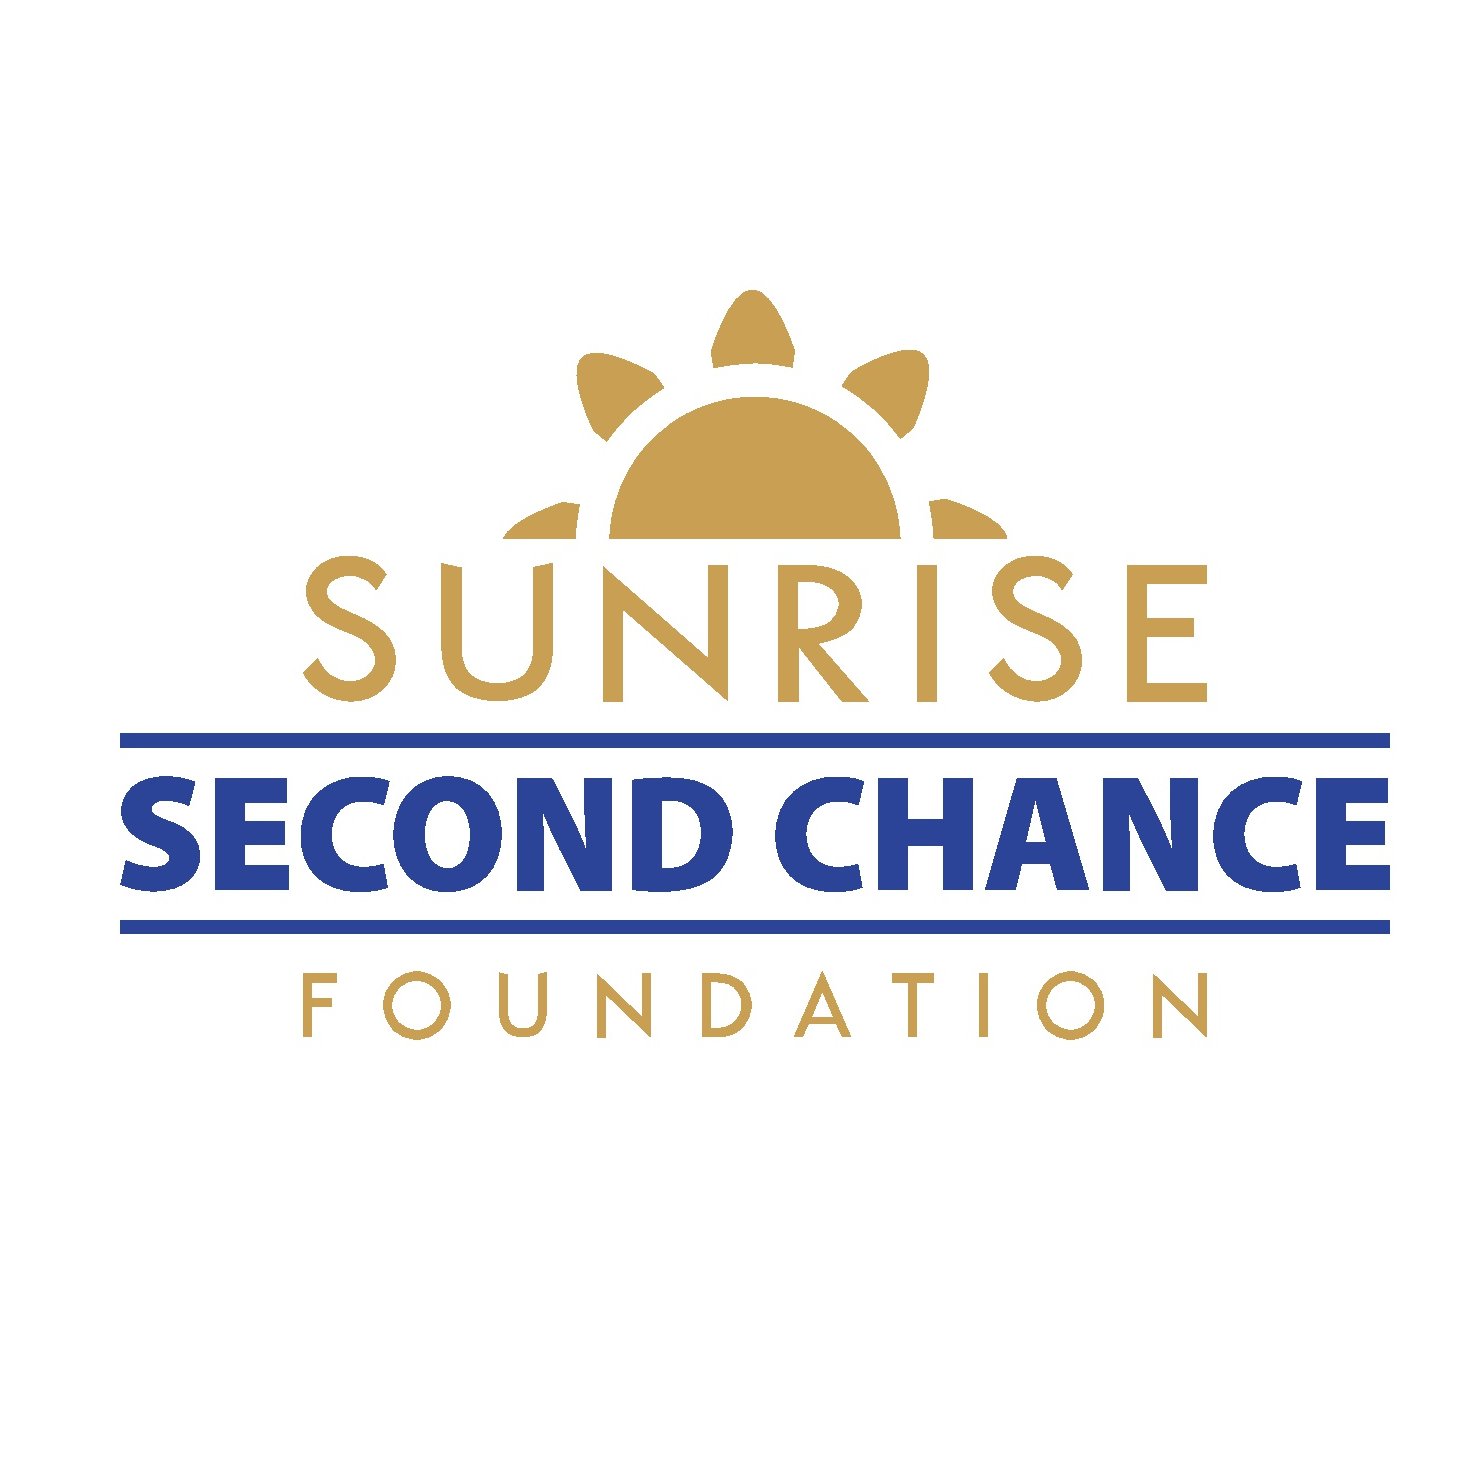 Sunrise Second Chance Foundation
22 Ball Street, Irvington, NJ 07111